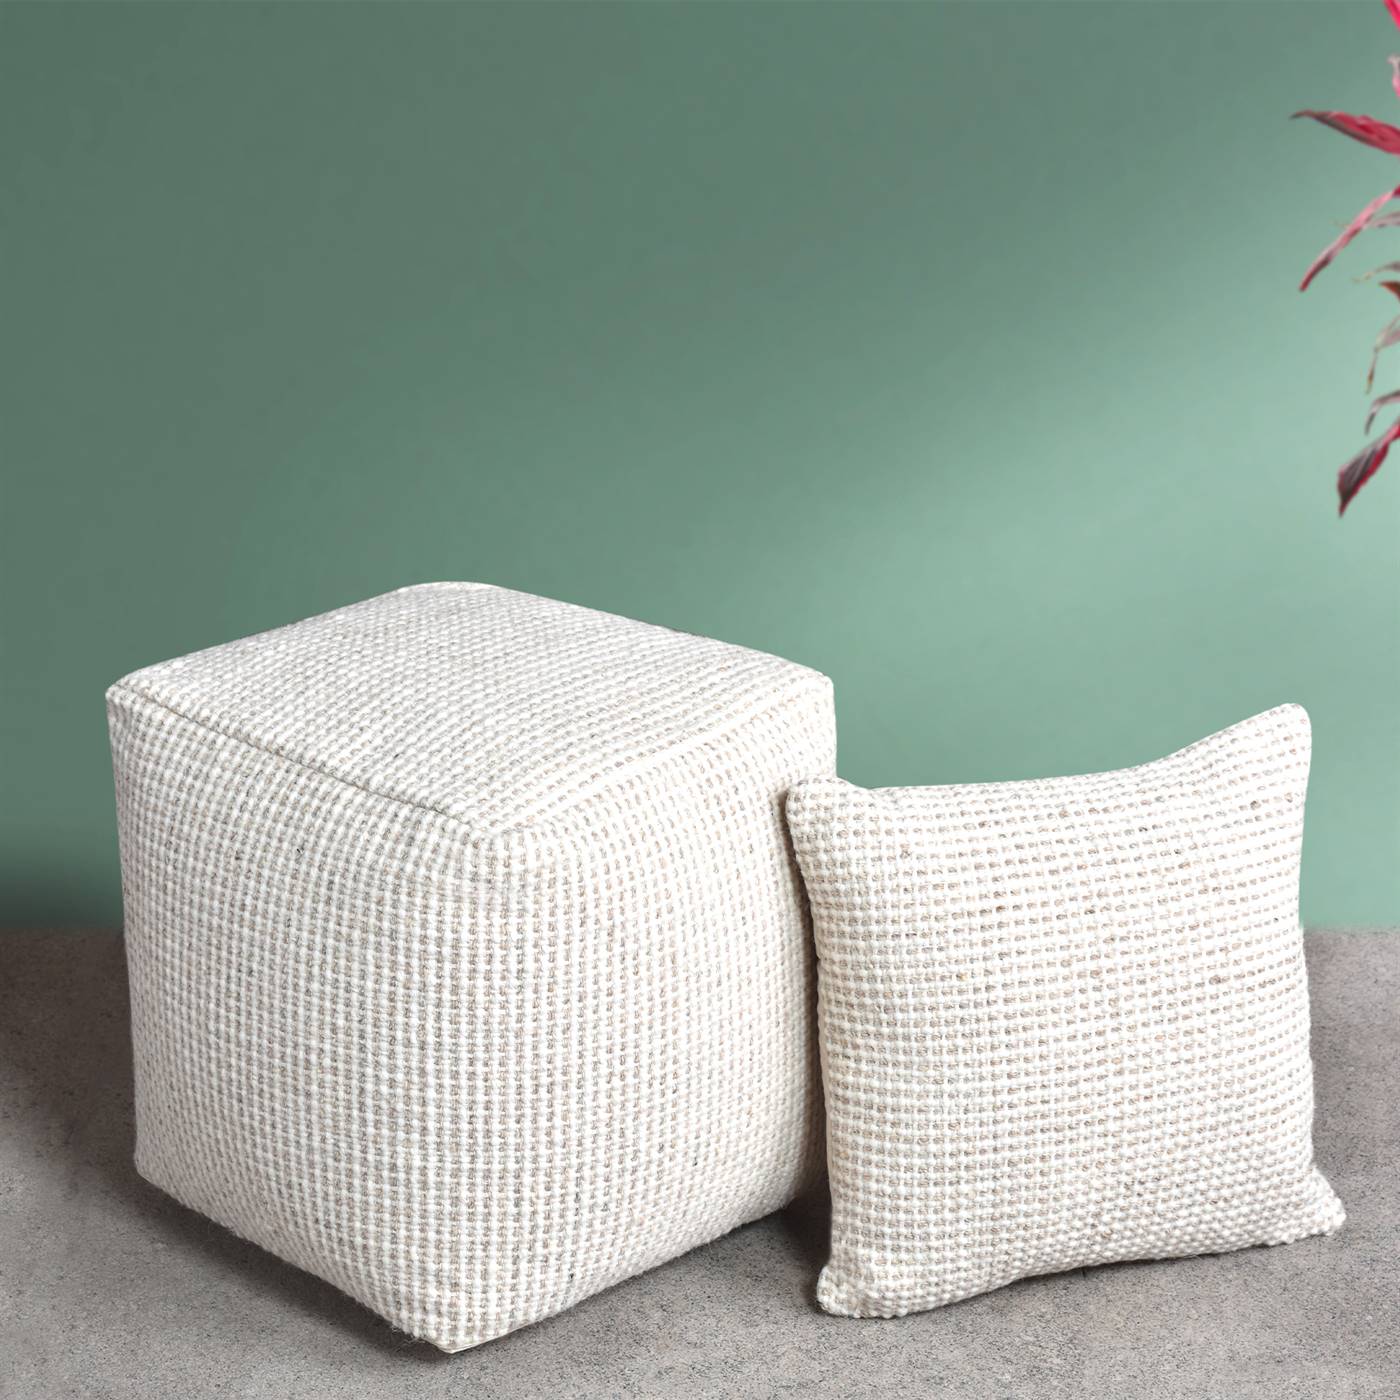 Nautilus Cushion, 45x45 cm, Natural White, Beige, Wool, Hand Woven, Handwoven, Flat Weave